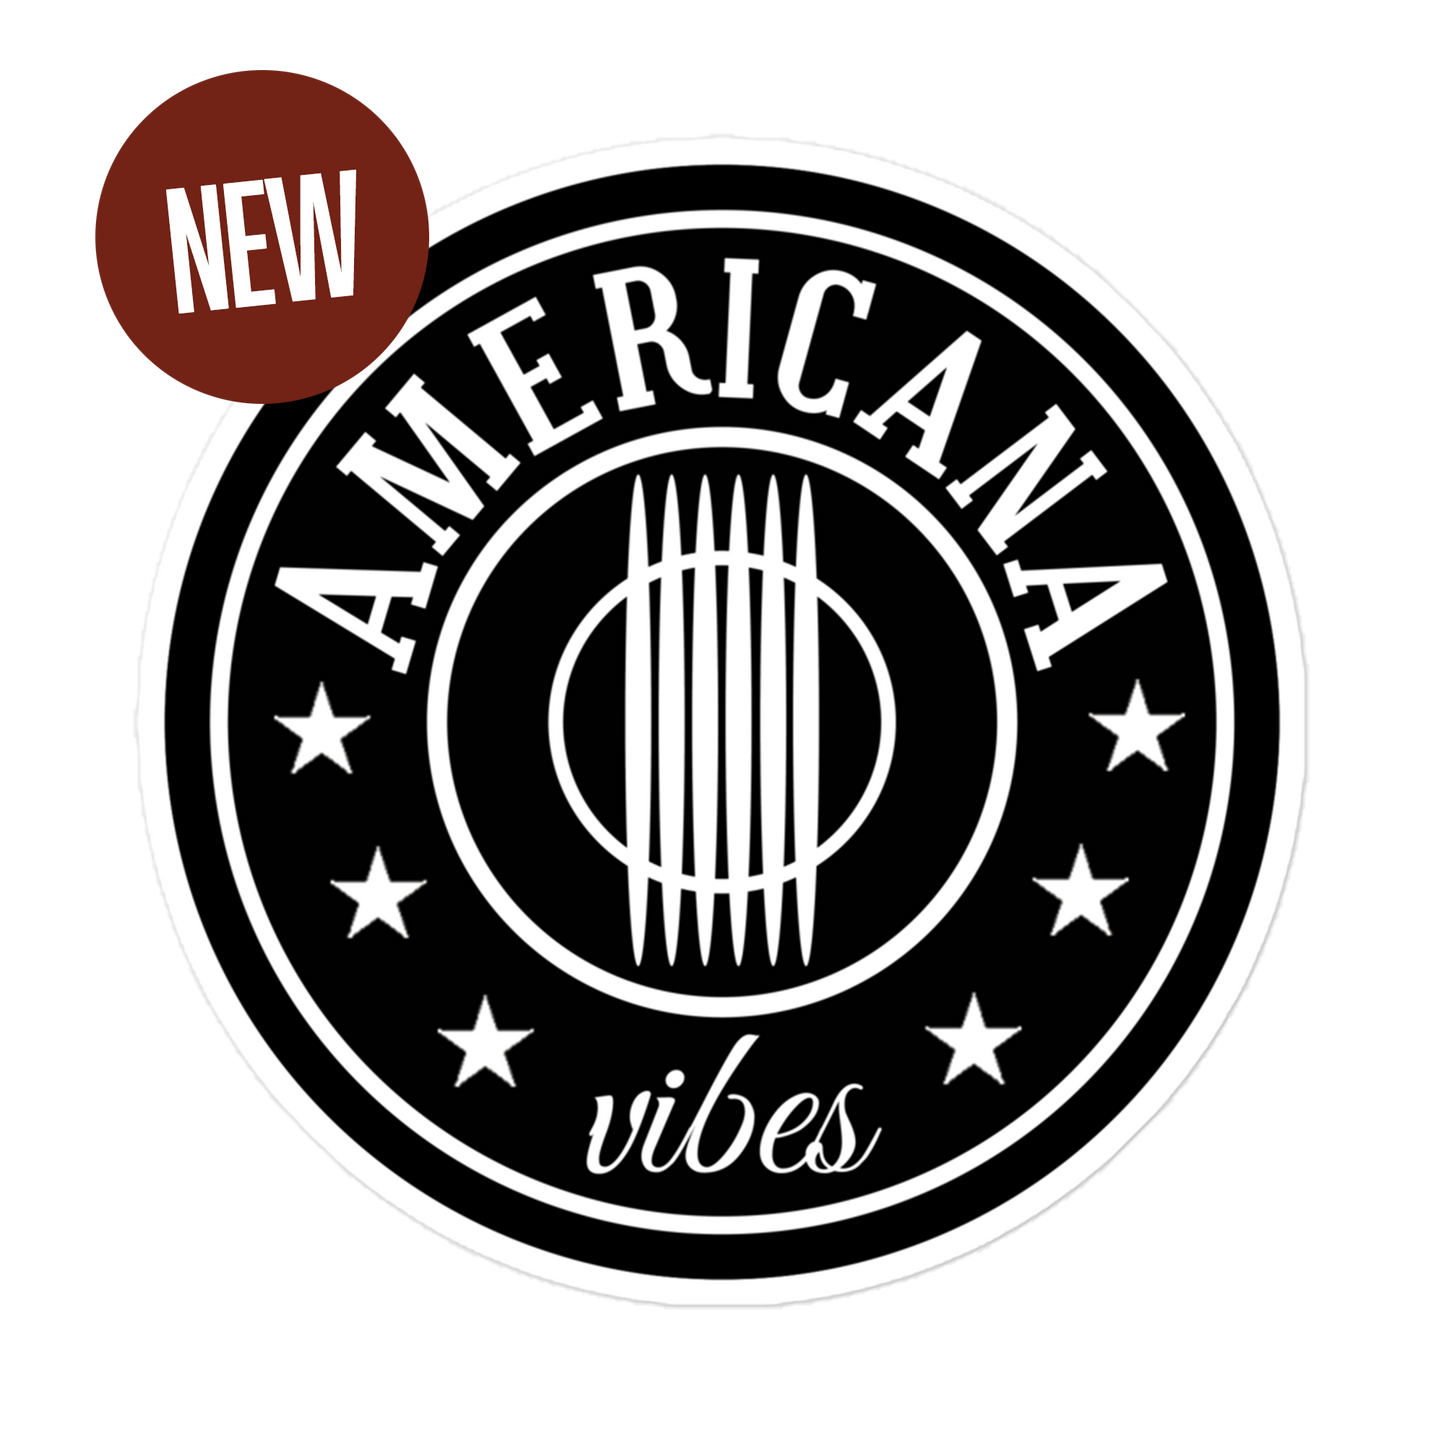 Americana Vibes Black Sticker